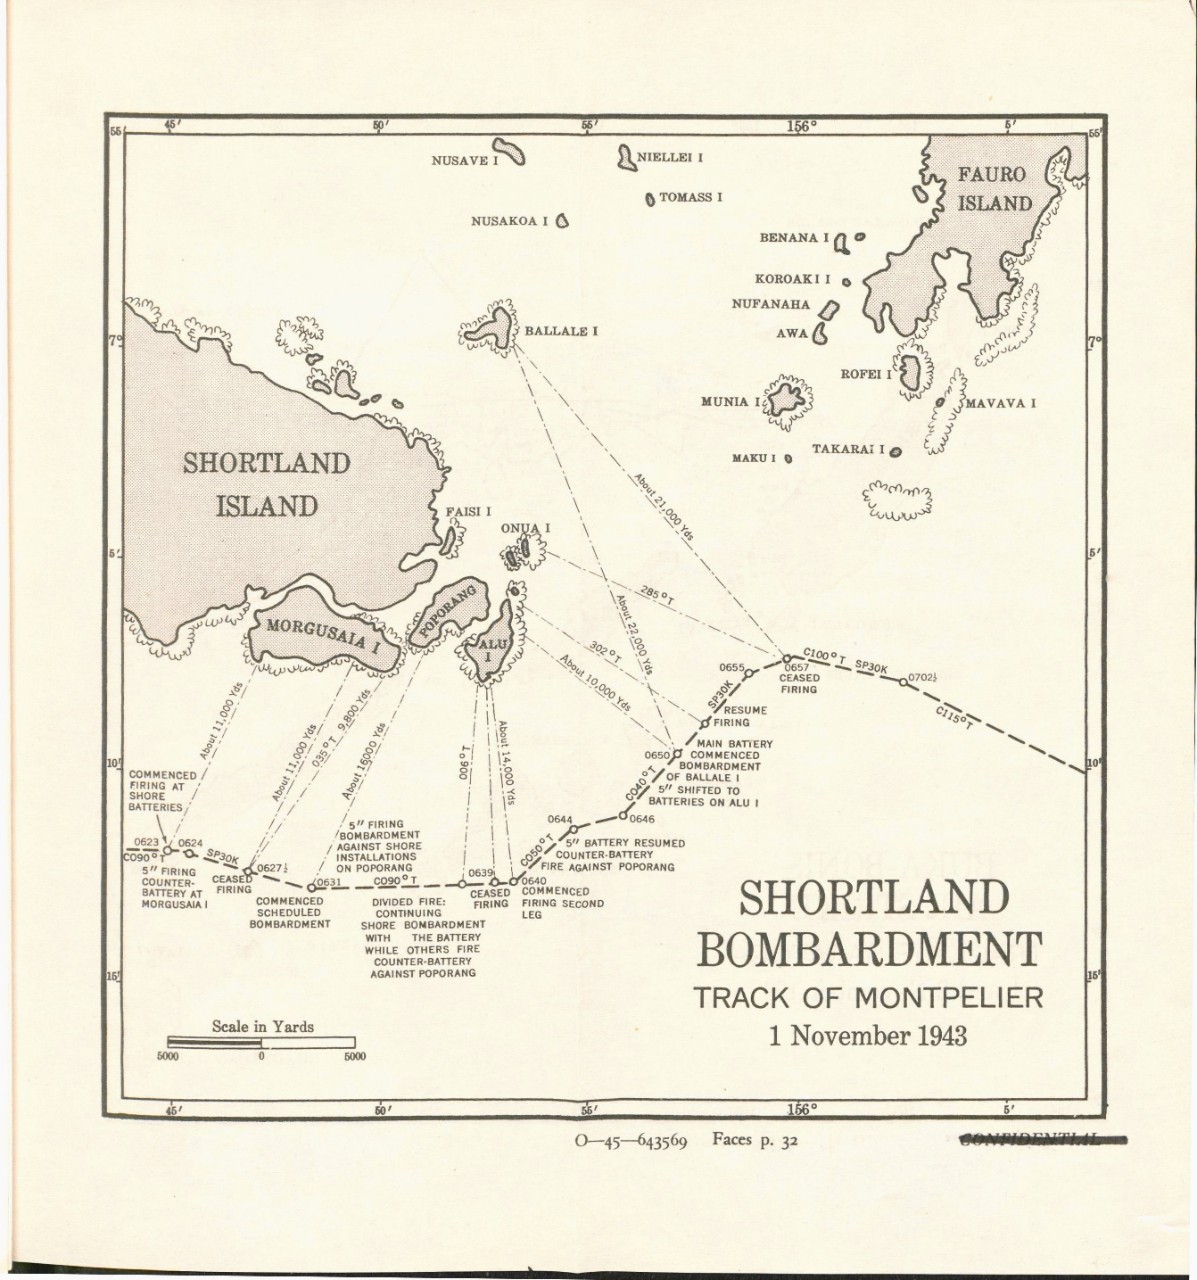 Shortland Bombardment Track of Montpeller, 1 November 1943